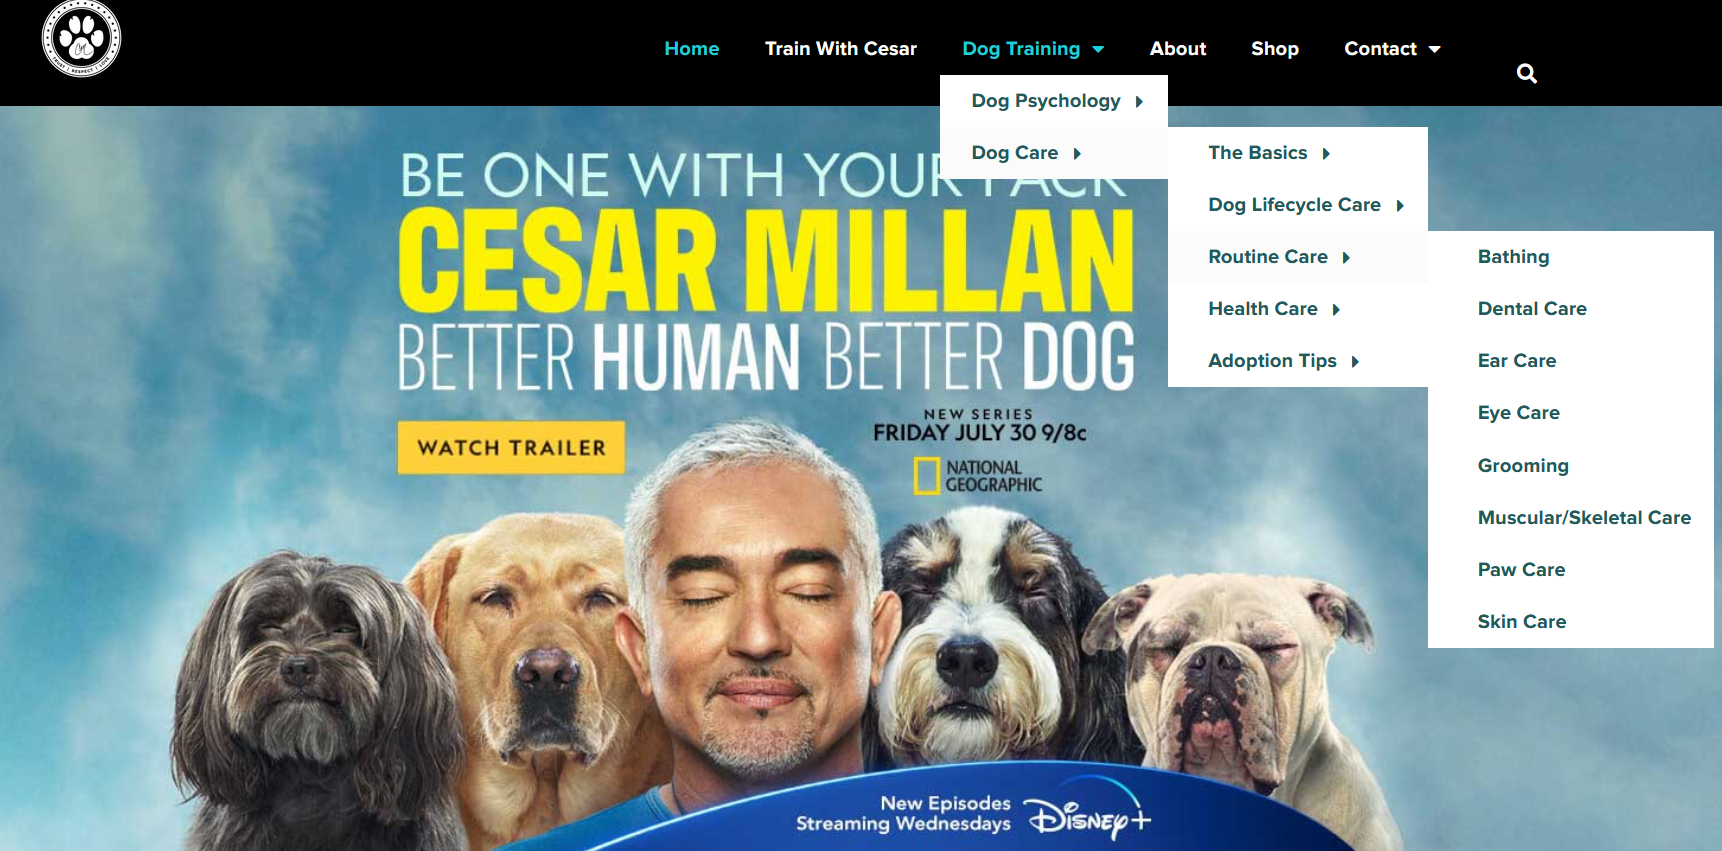 CesarsWay Website Dog Training Resources